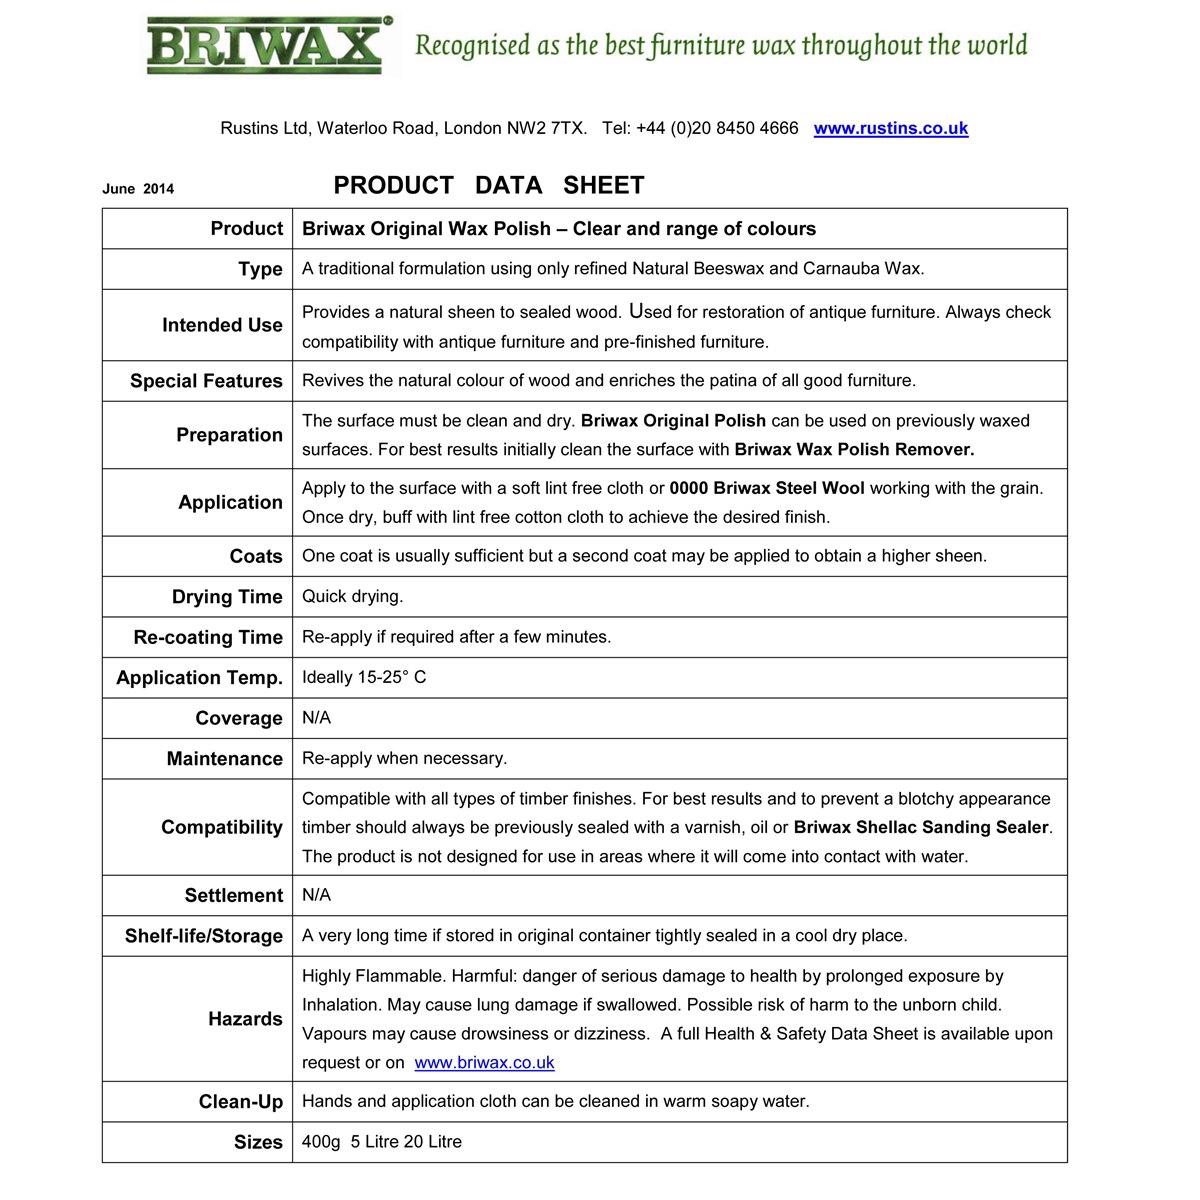 How to apply Briwax Original Wax Polish Clear 